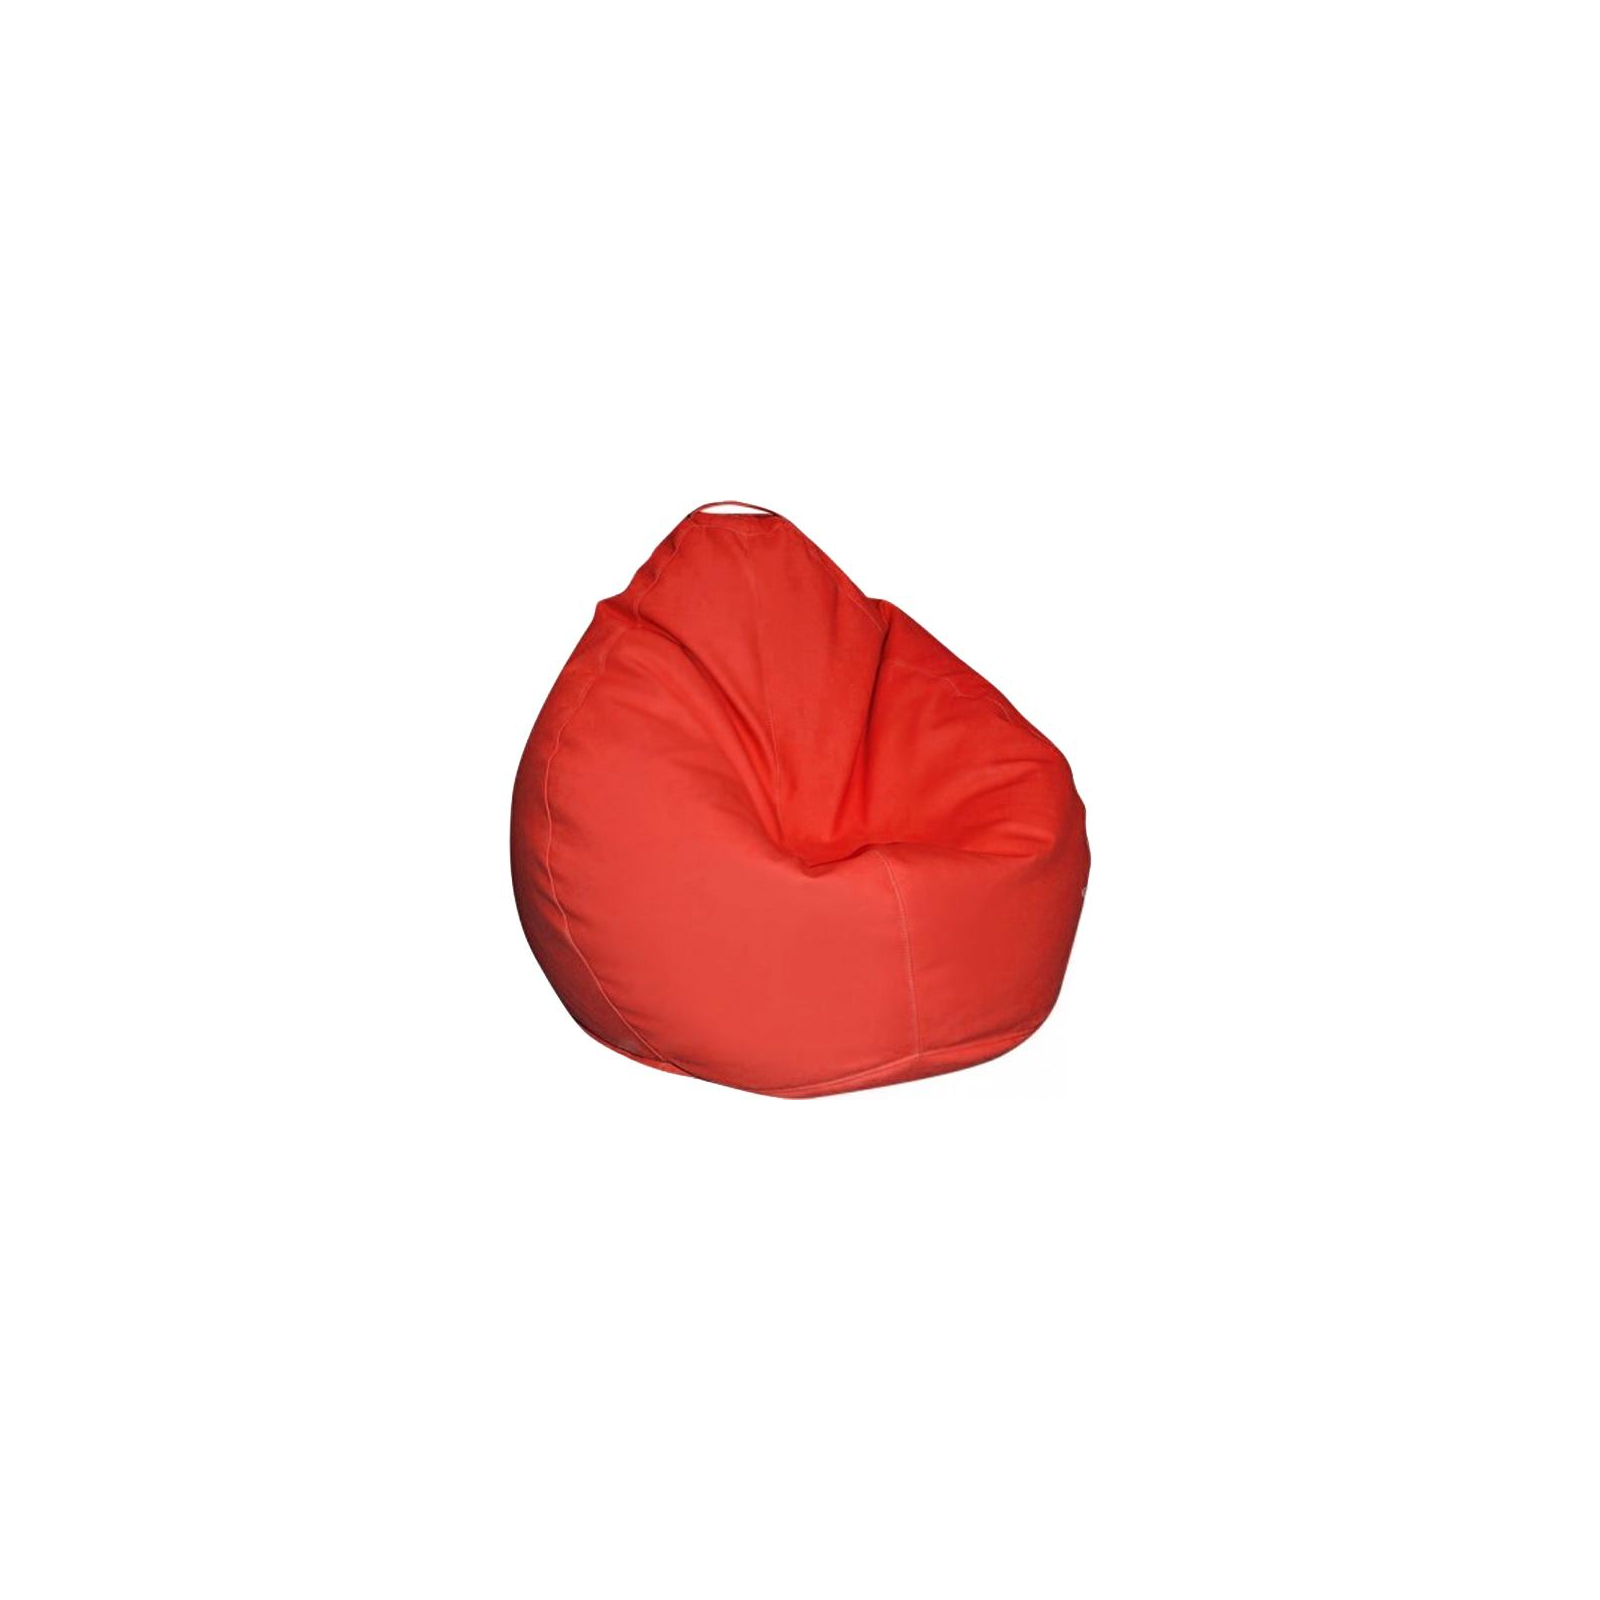 Кресло-мешок Примтекс плюс кресло-груша Tomber OX-162 M Red (Tomber OX-162 M Red)